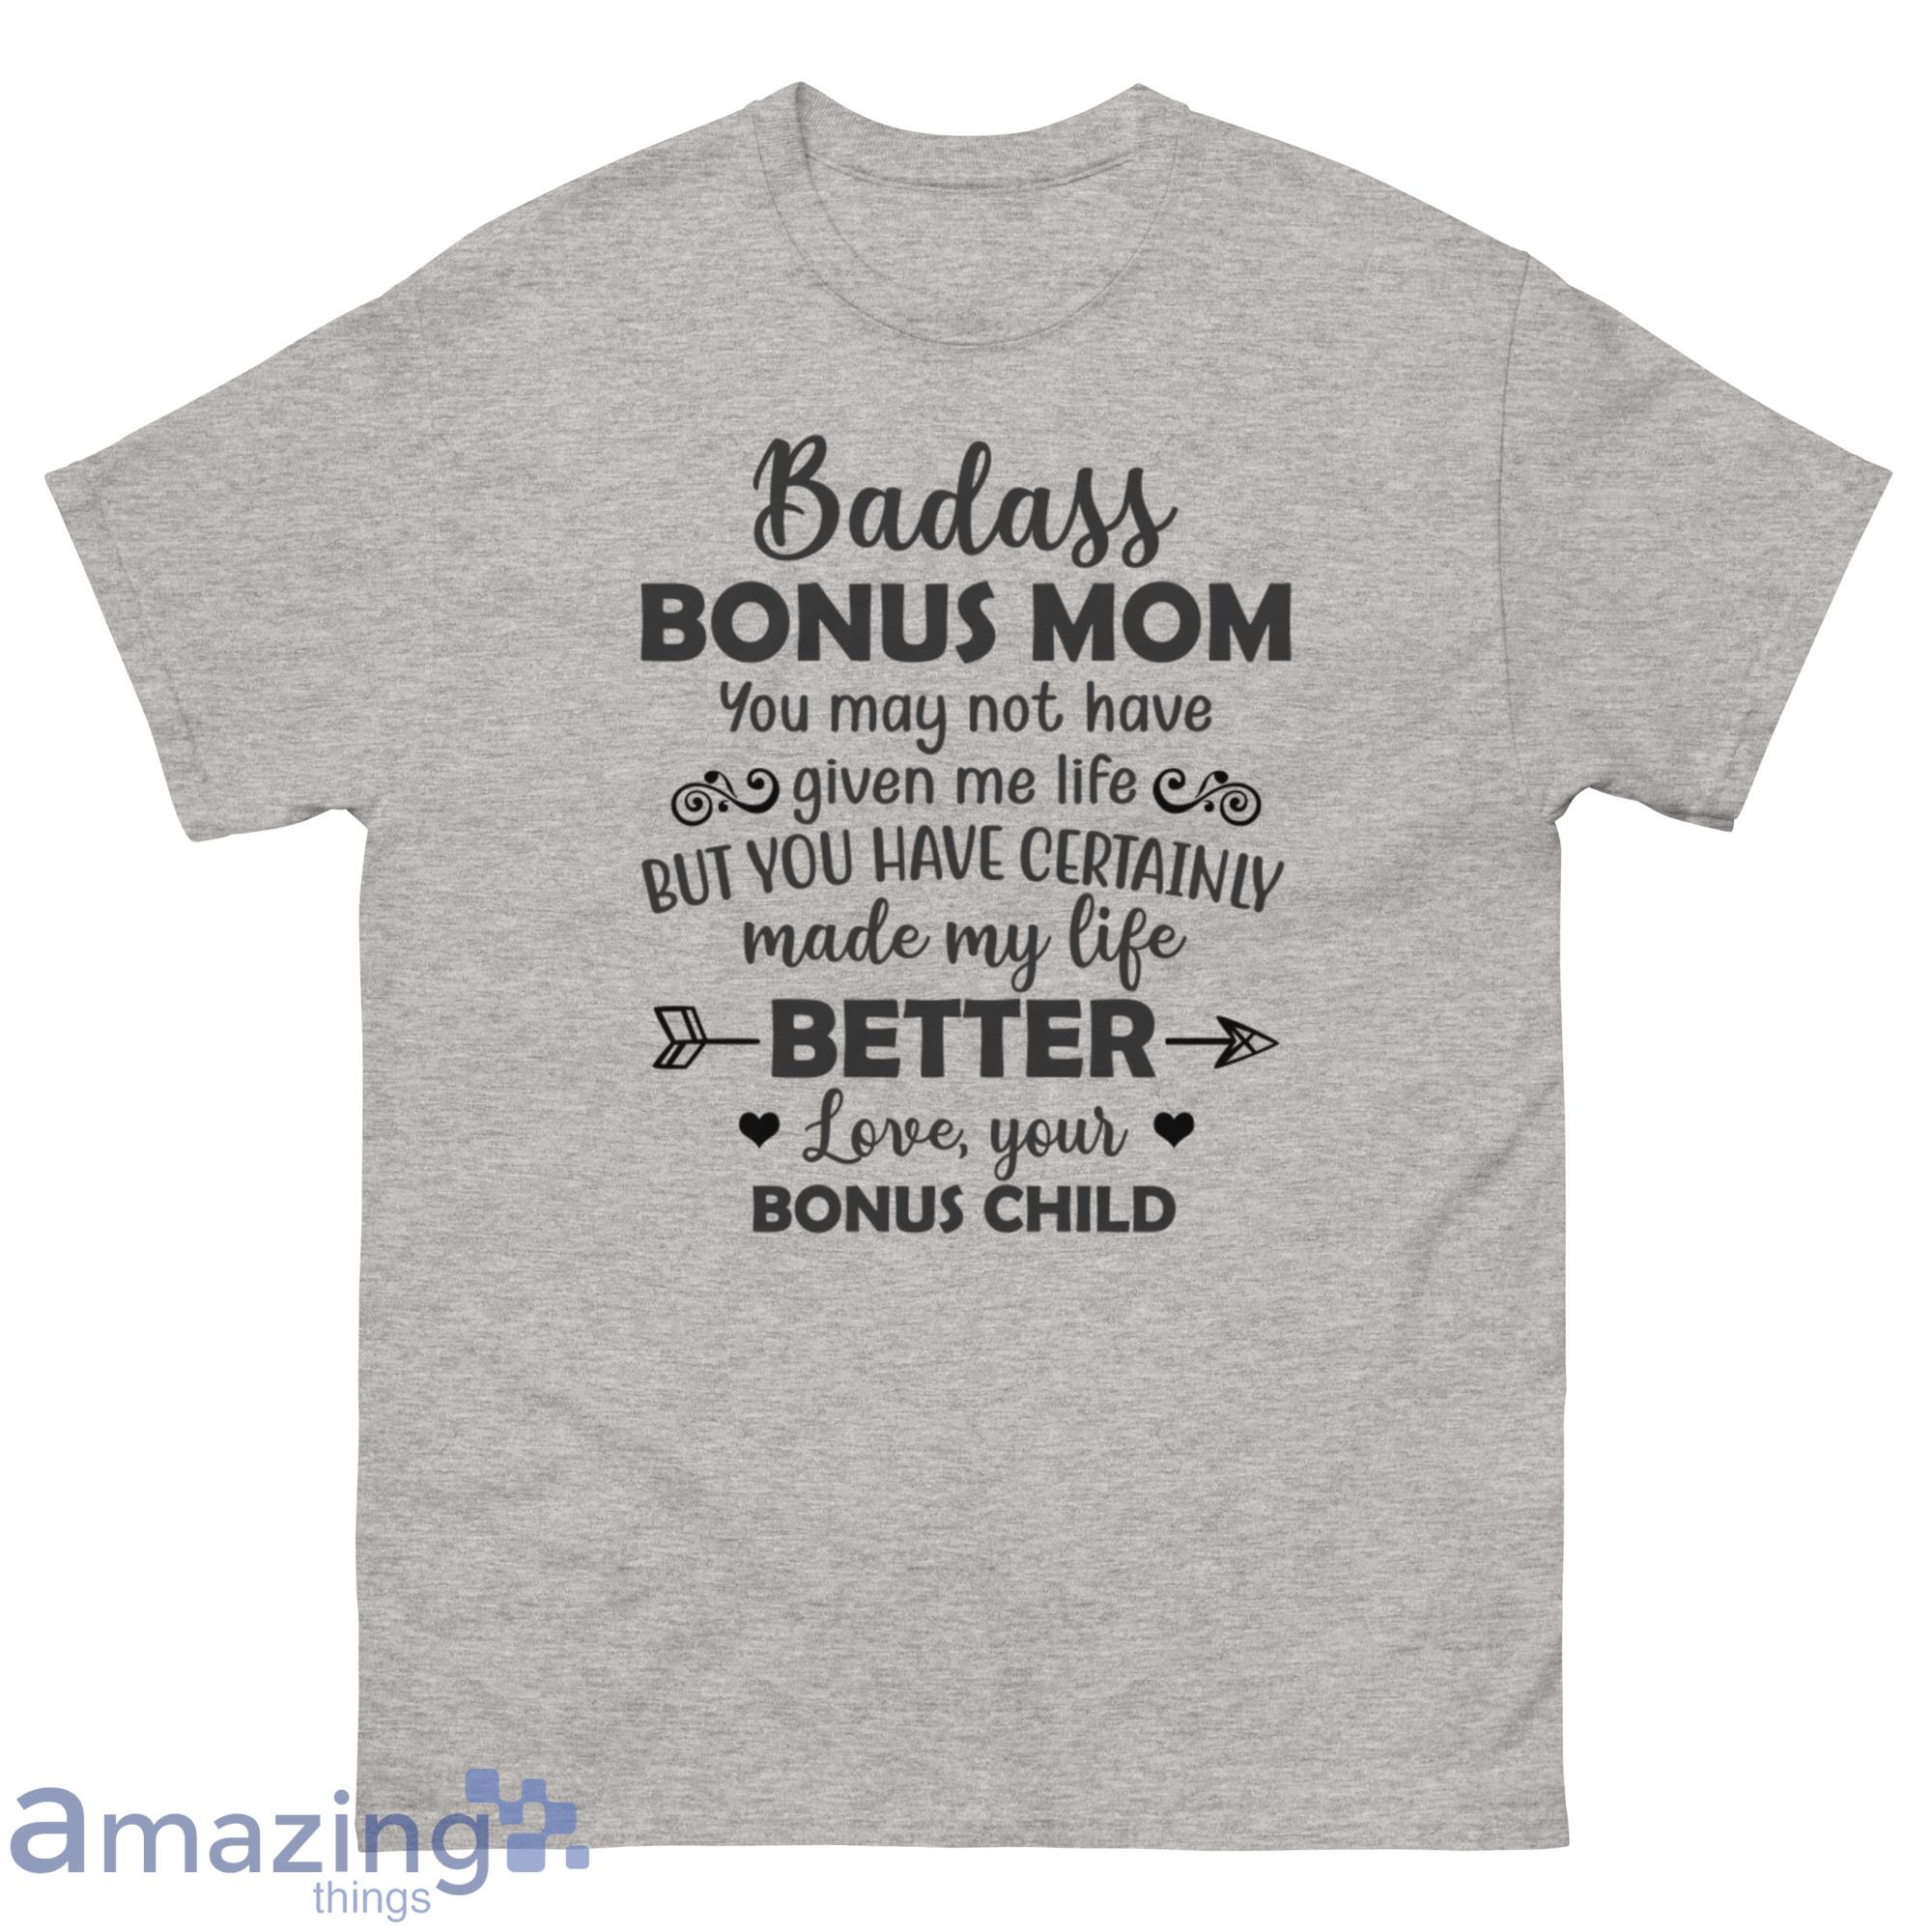 https://image.whatamazingthings.com/2022/10/badass-bonus-mom-you-may-not-have-given-me-life-but-you-made-my-life-shirt-1.jpeg